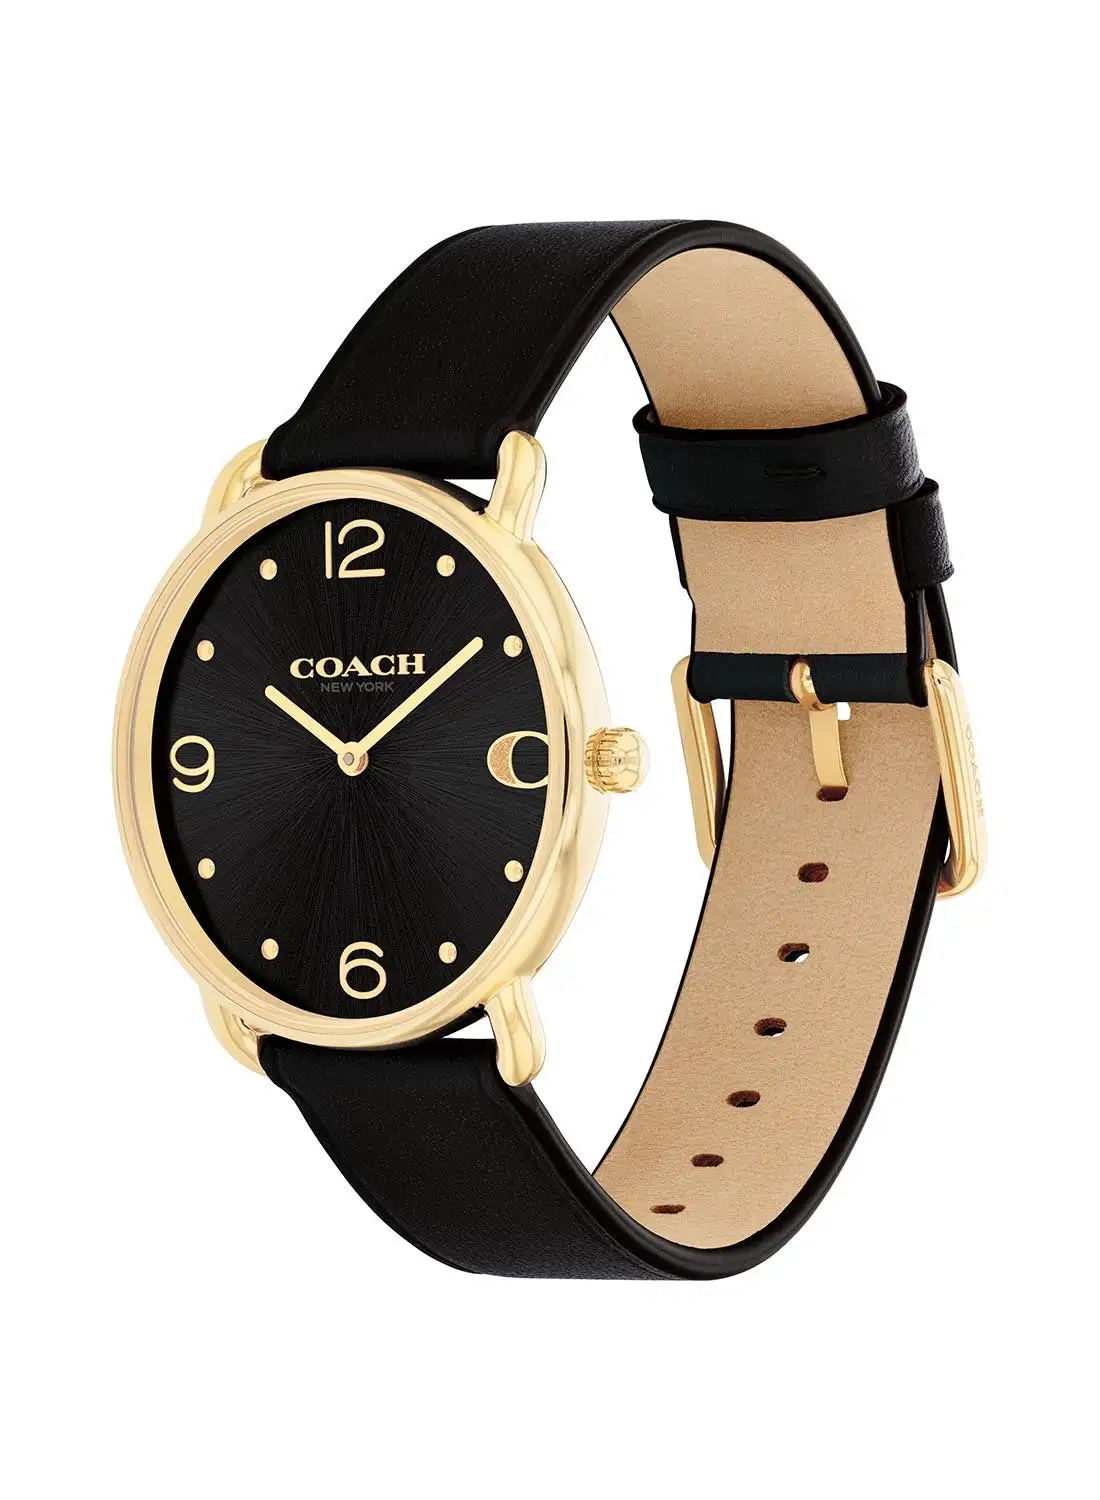 COACH Women's Analog Round Shape Leather Wrist Watch 14504245 - 36 Mm